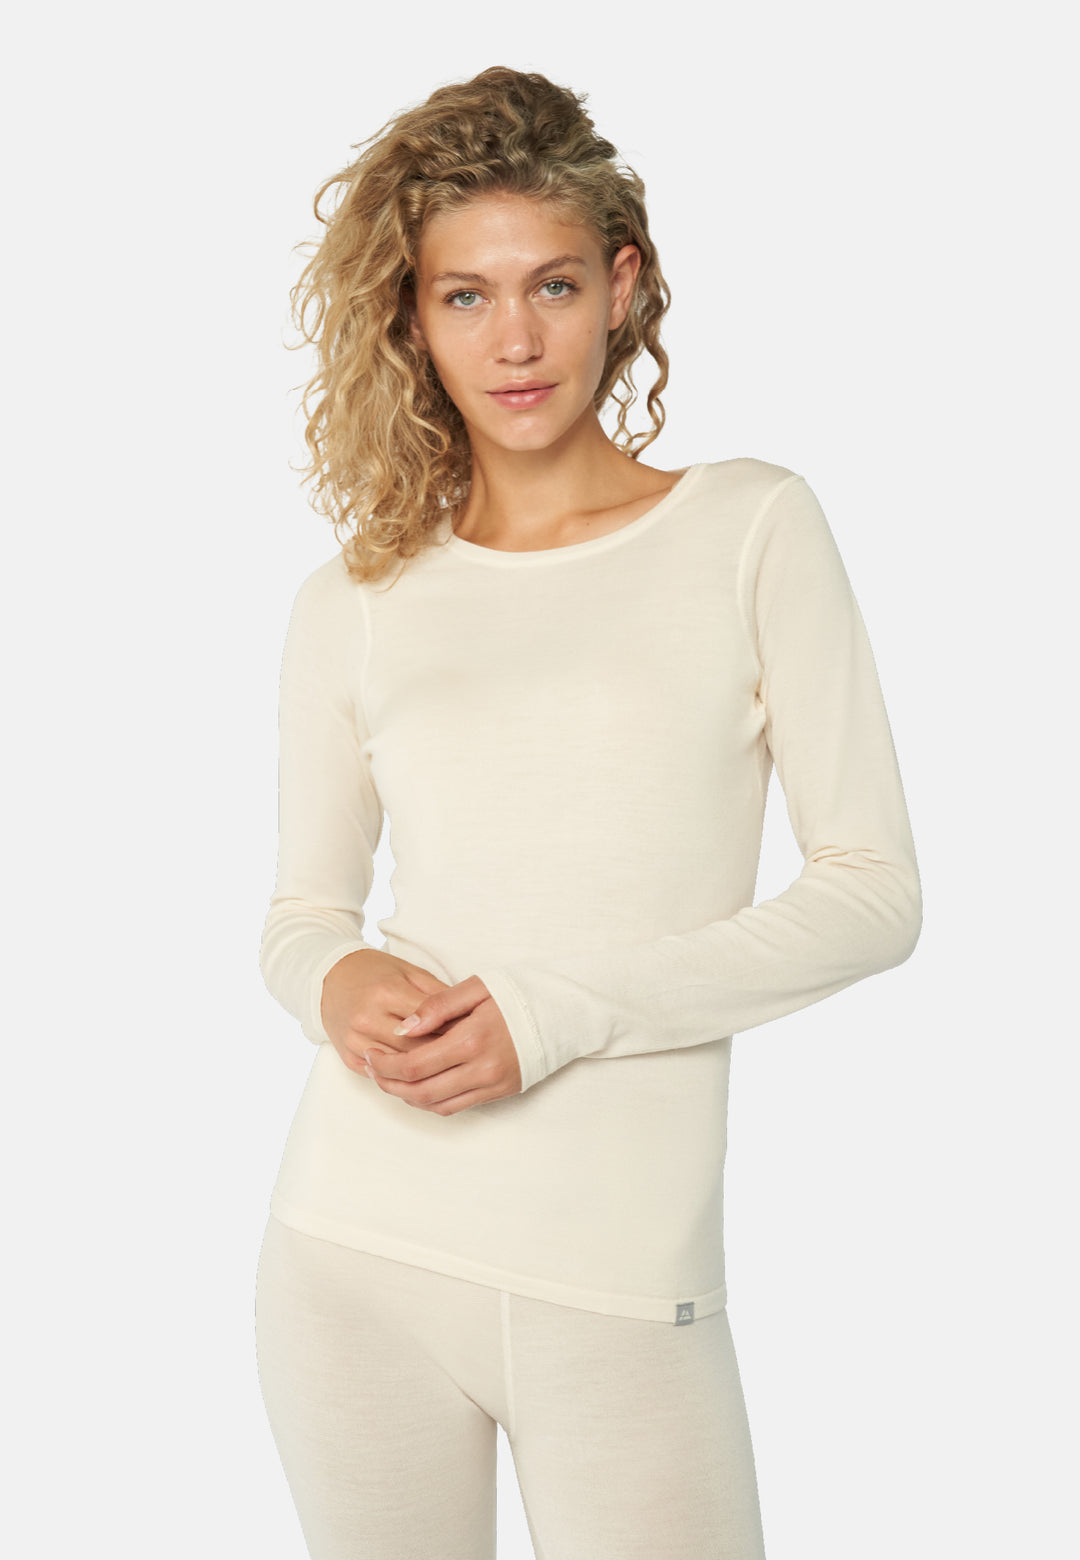 DANISH ENDURANCE Merino Wool Base Layer Shirt for Women, Thermal